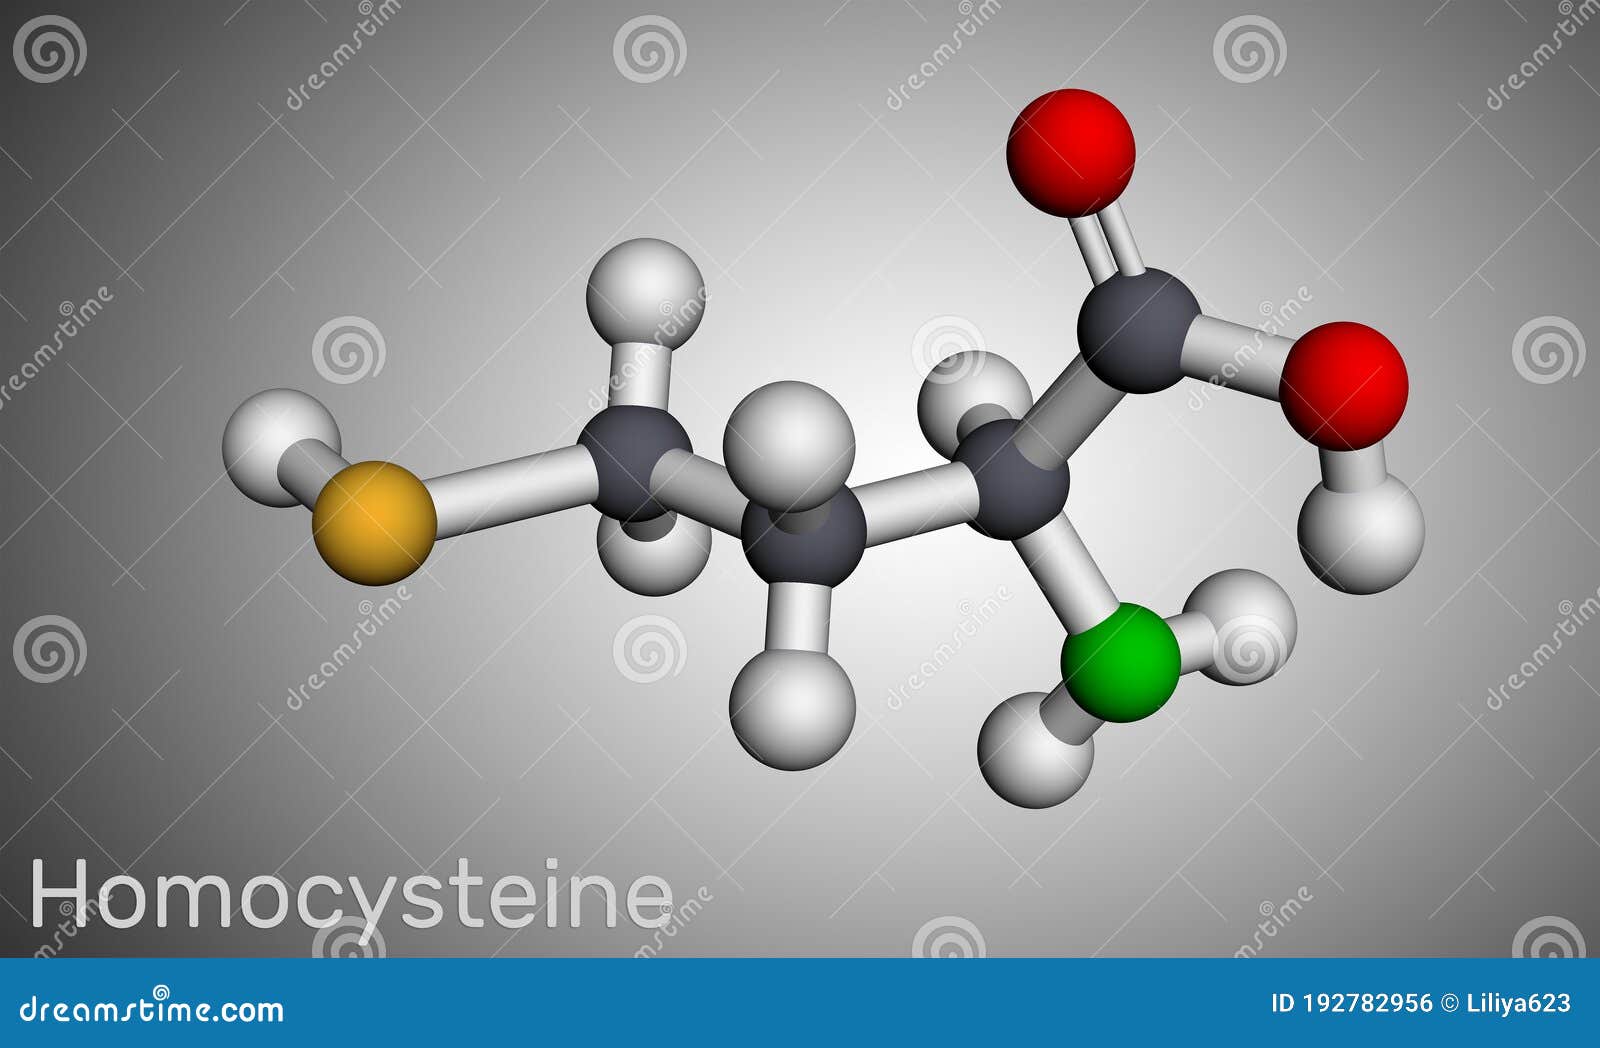 homocysteine biomarker molecule. it is a sulfur-containing non-proteinogenic amino acid